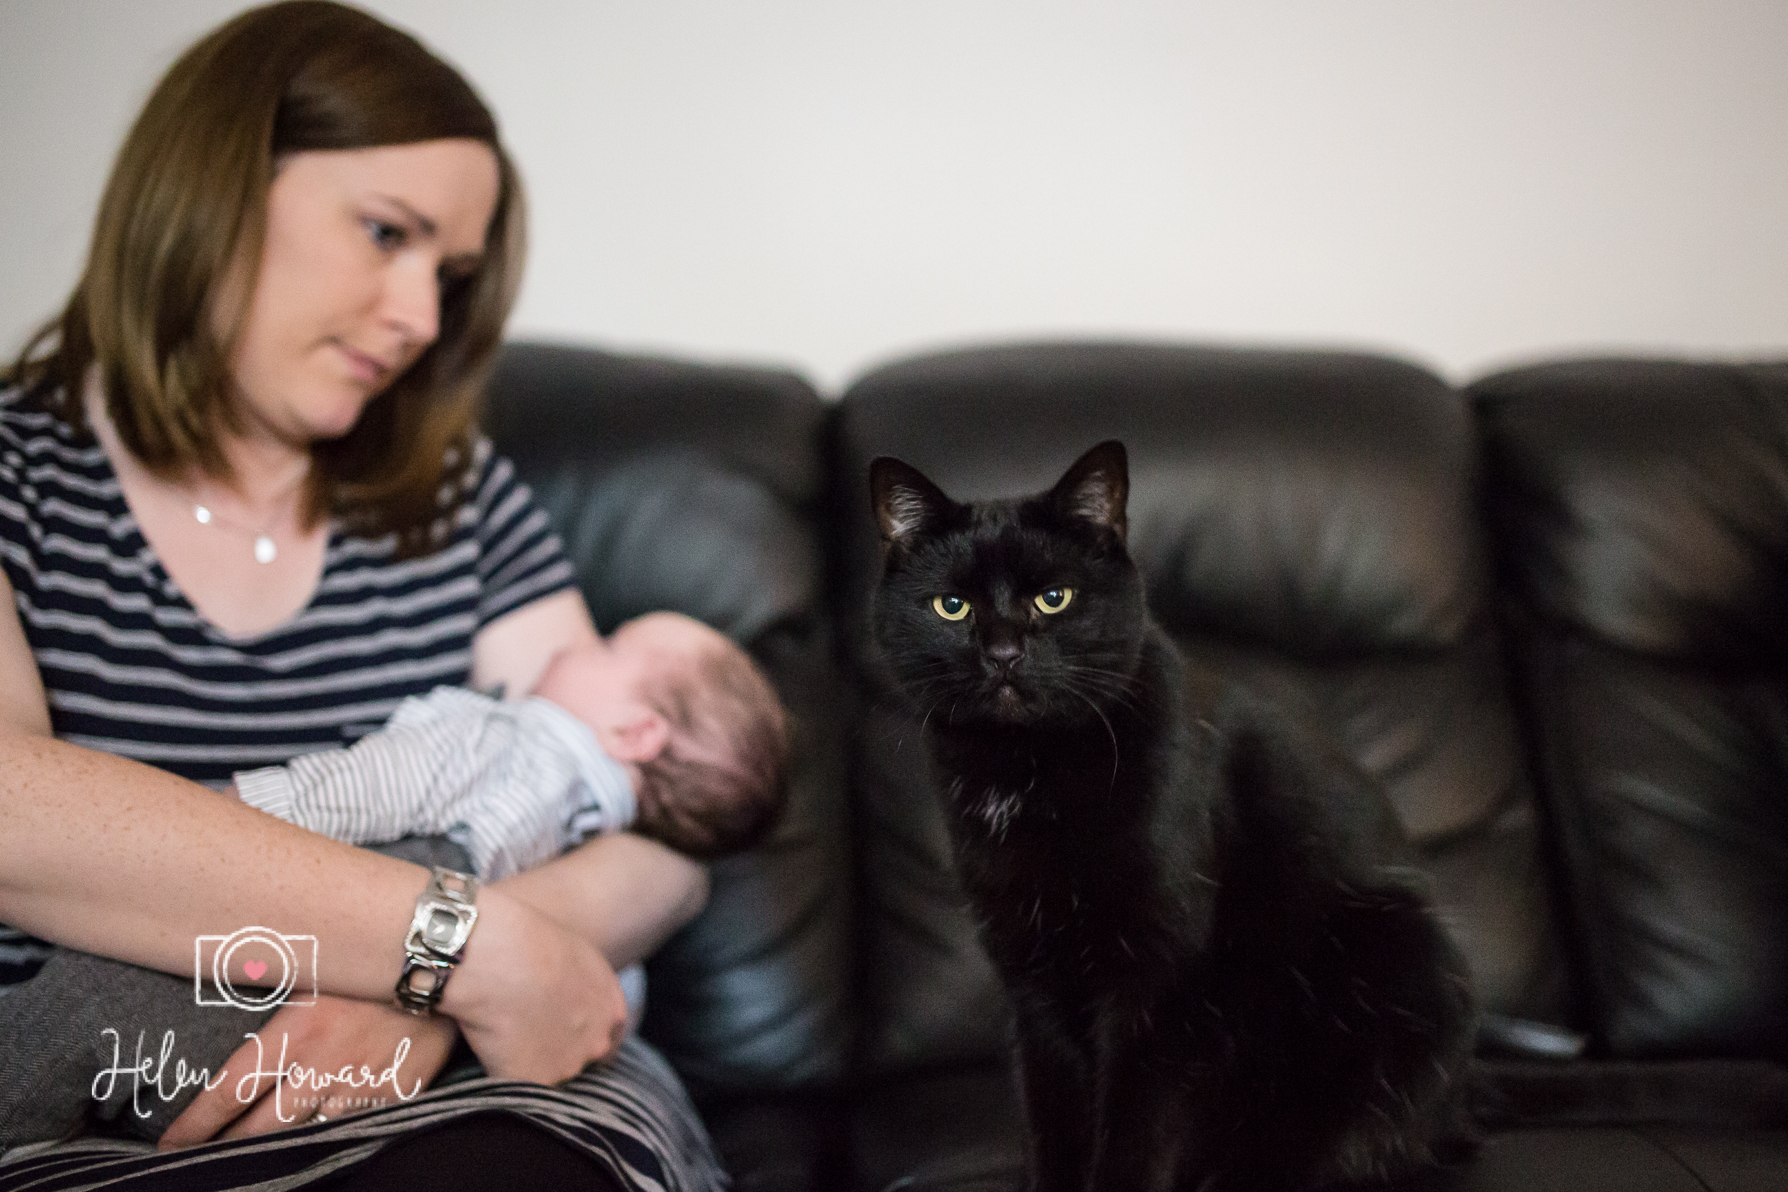 Family Newborn Photography by Helen Howard-14.jpg